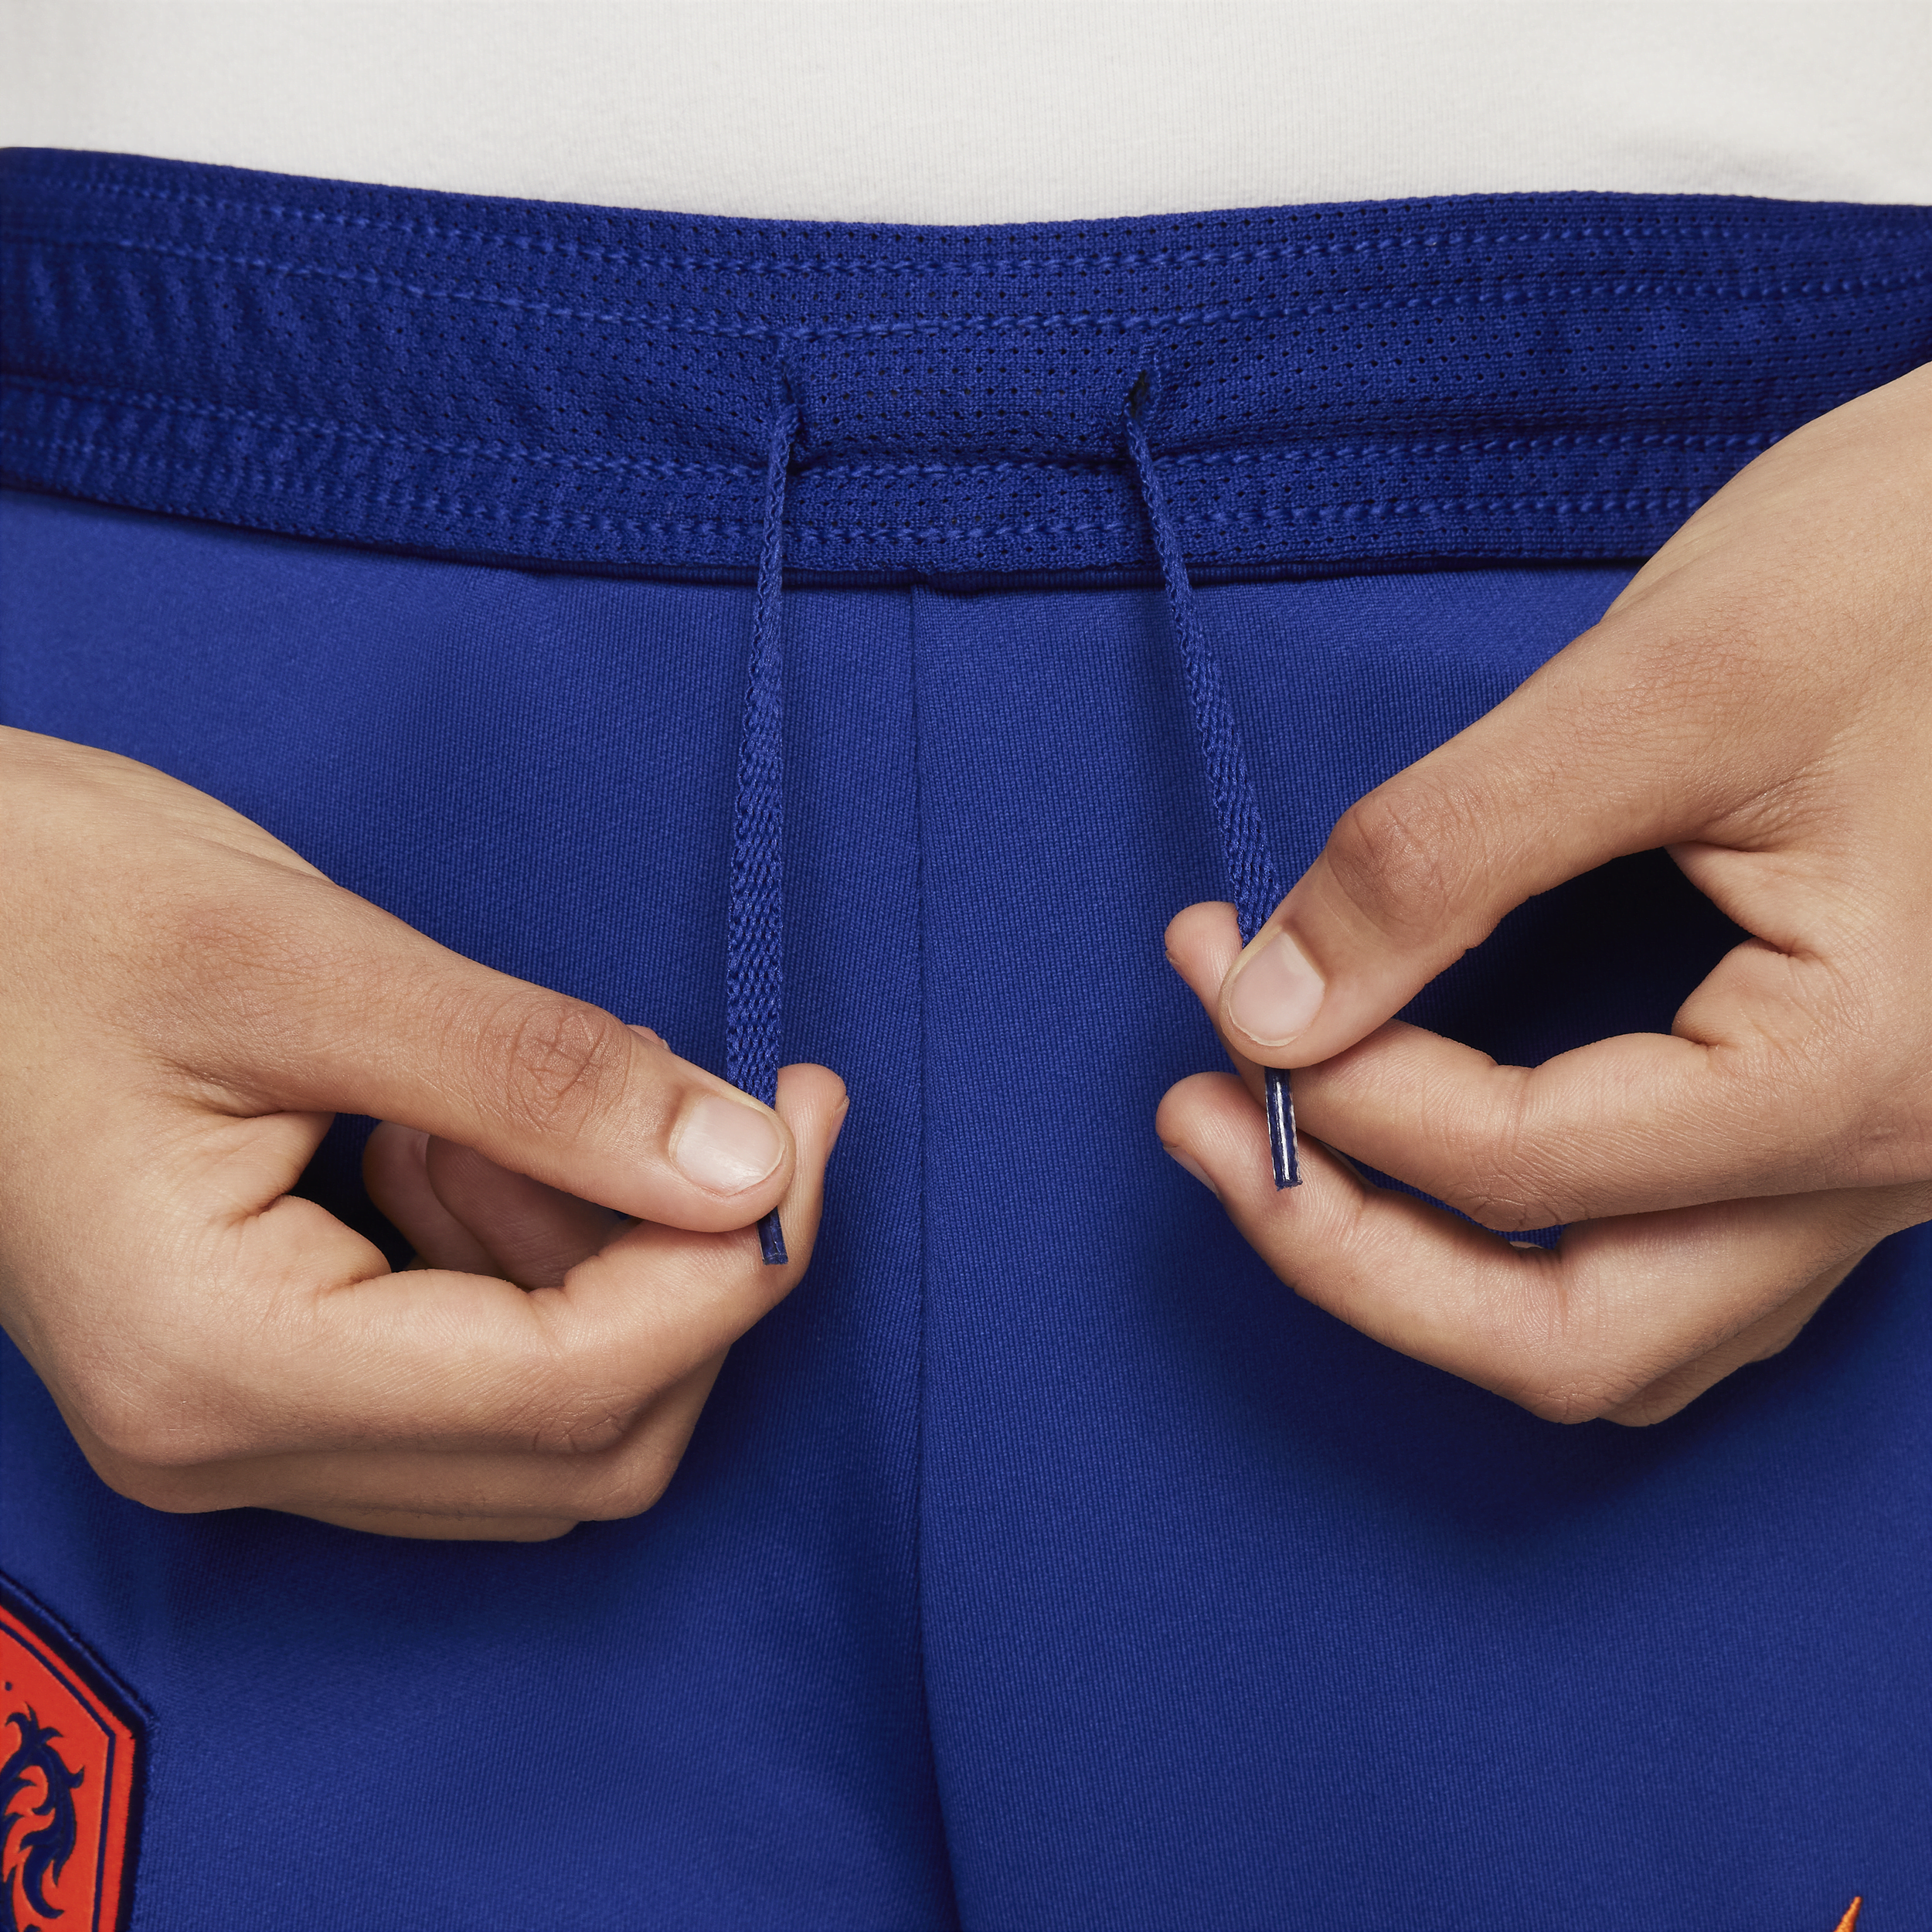 Nike Nederland Strike Dri-FIT knit voetbalbroek voor kids Blauw